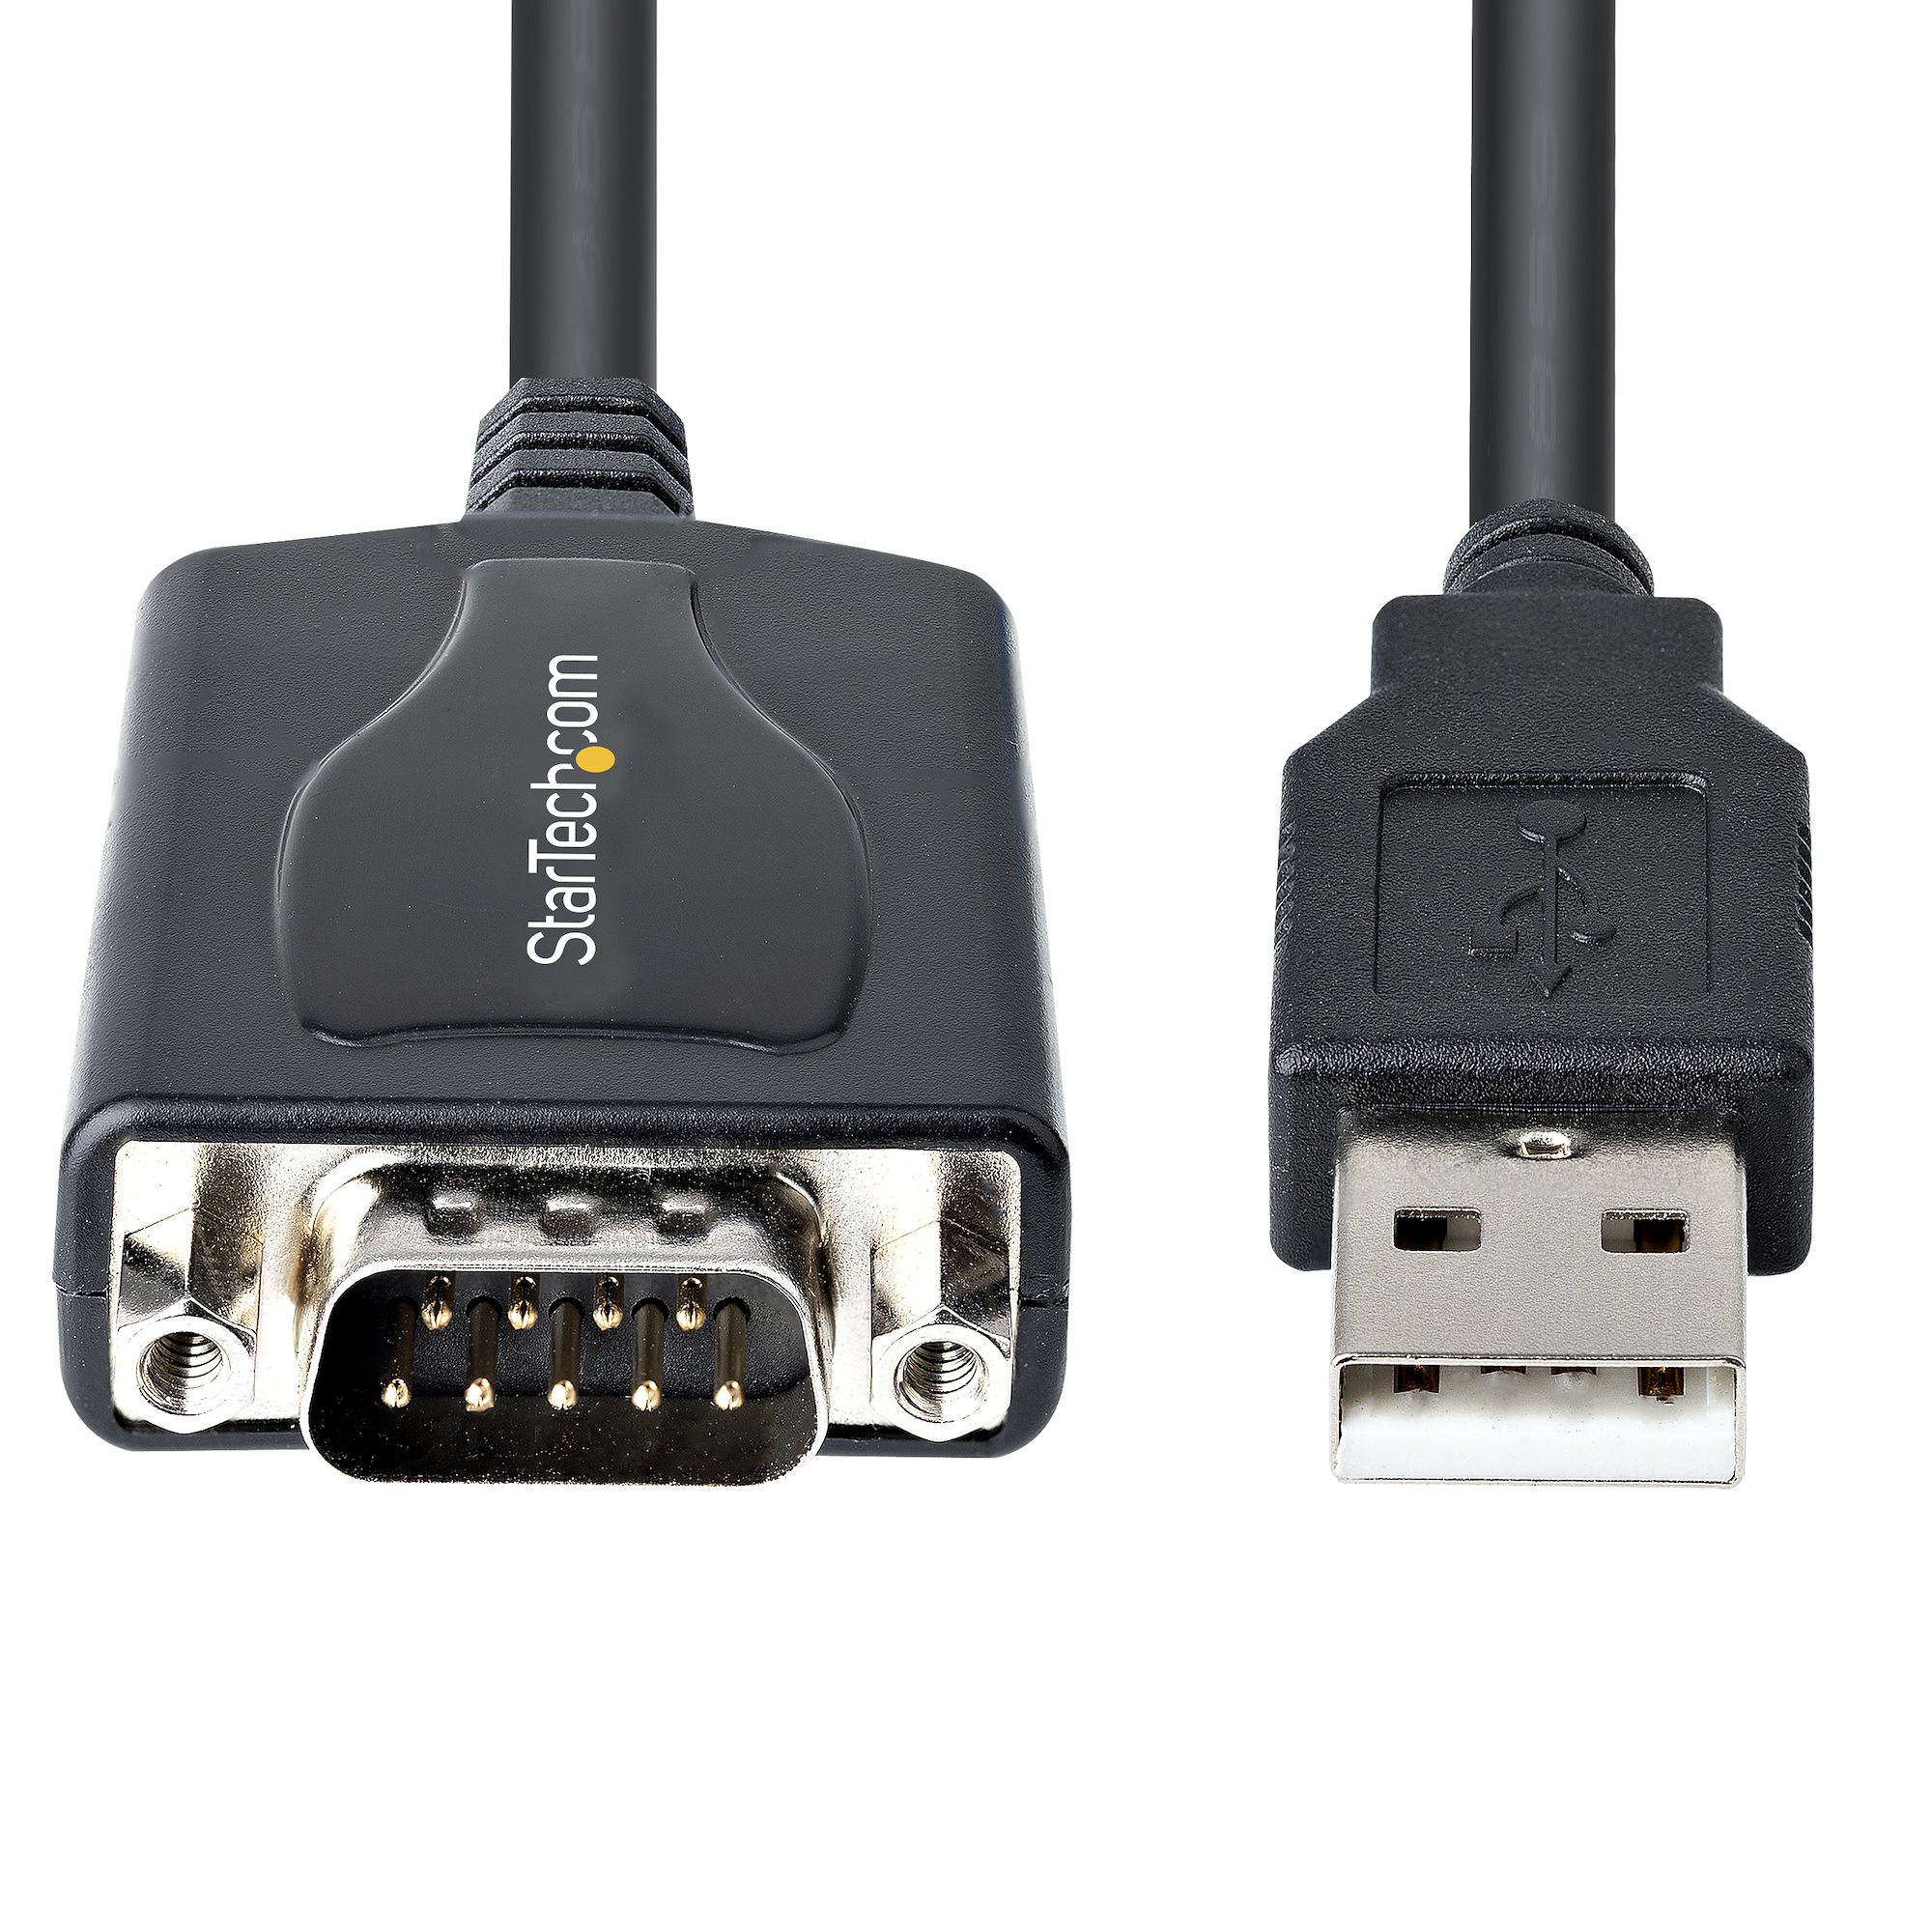 Prises réseau, USB, TV - OneKeyElectro